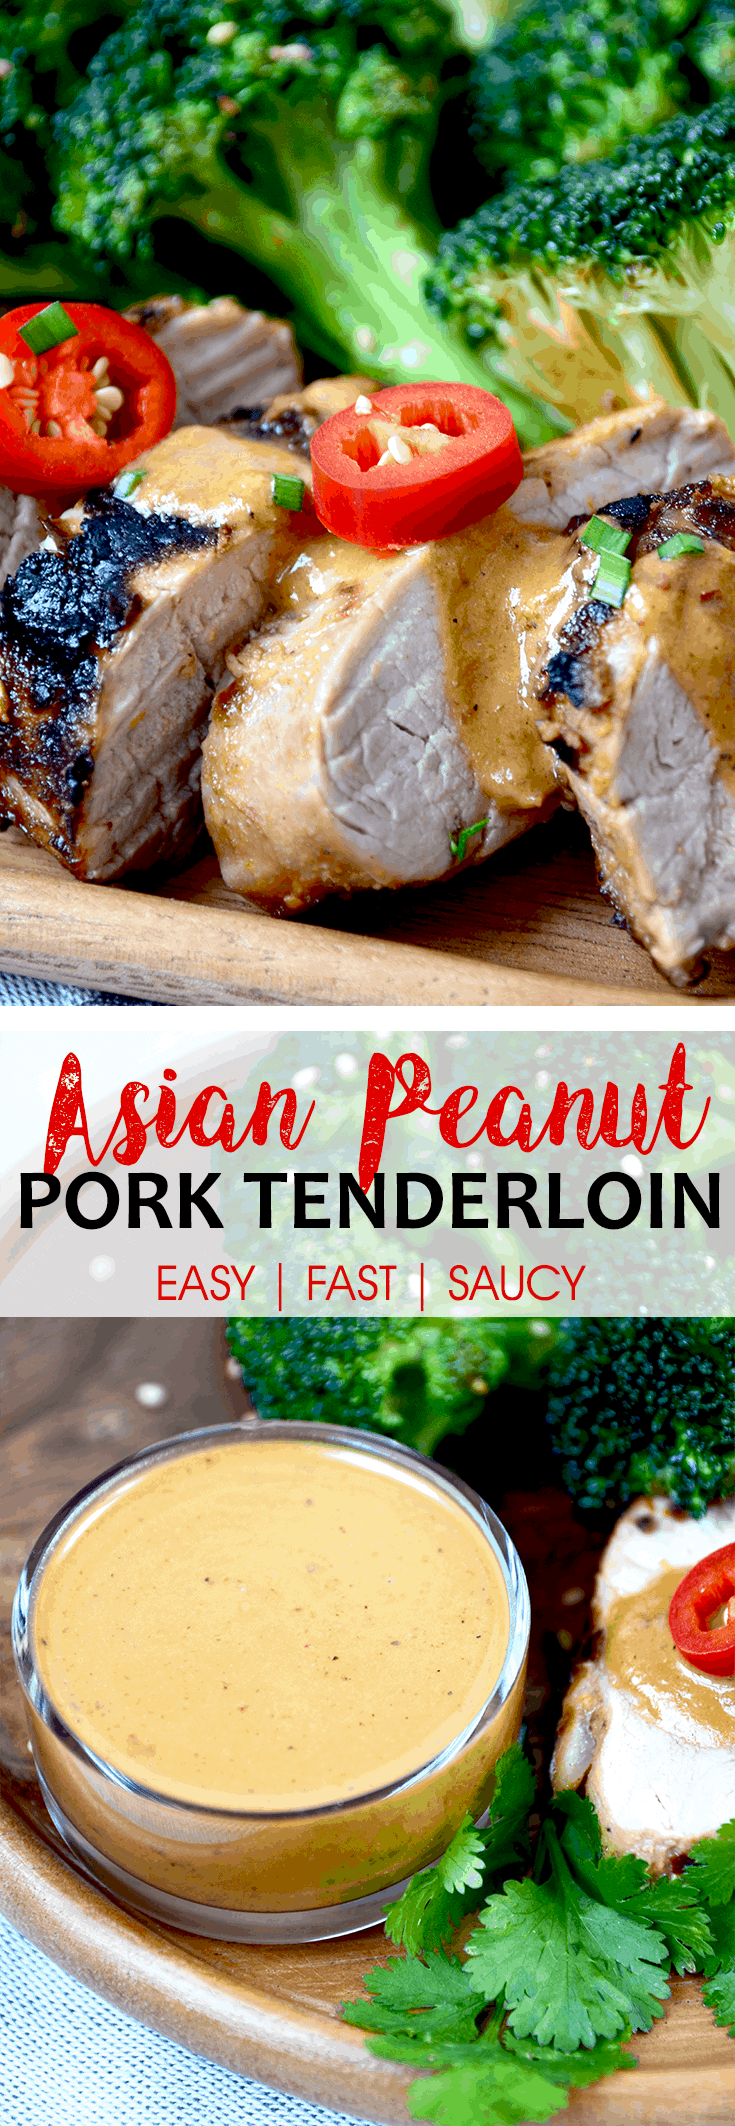 Asian Peanut Pork Tenderloin Pin - Asian Peanut Pork Tenderloin